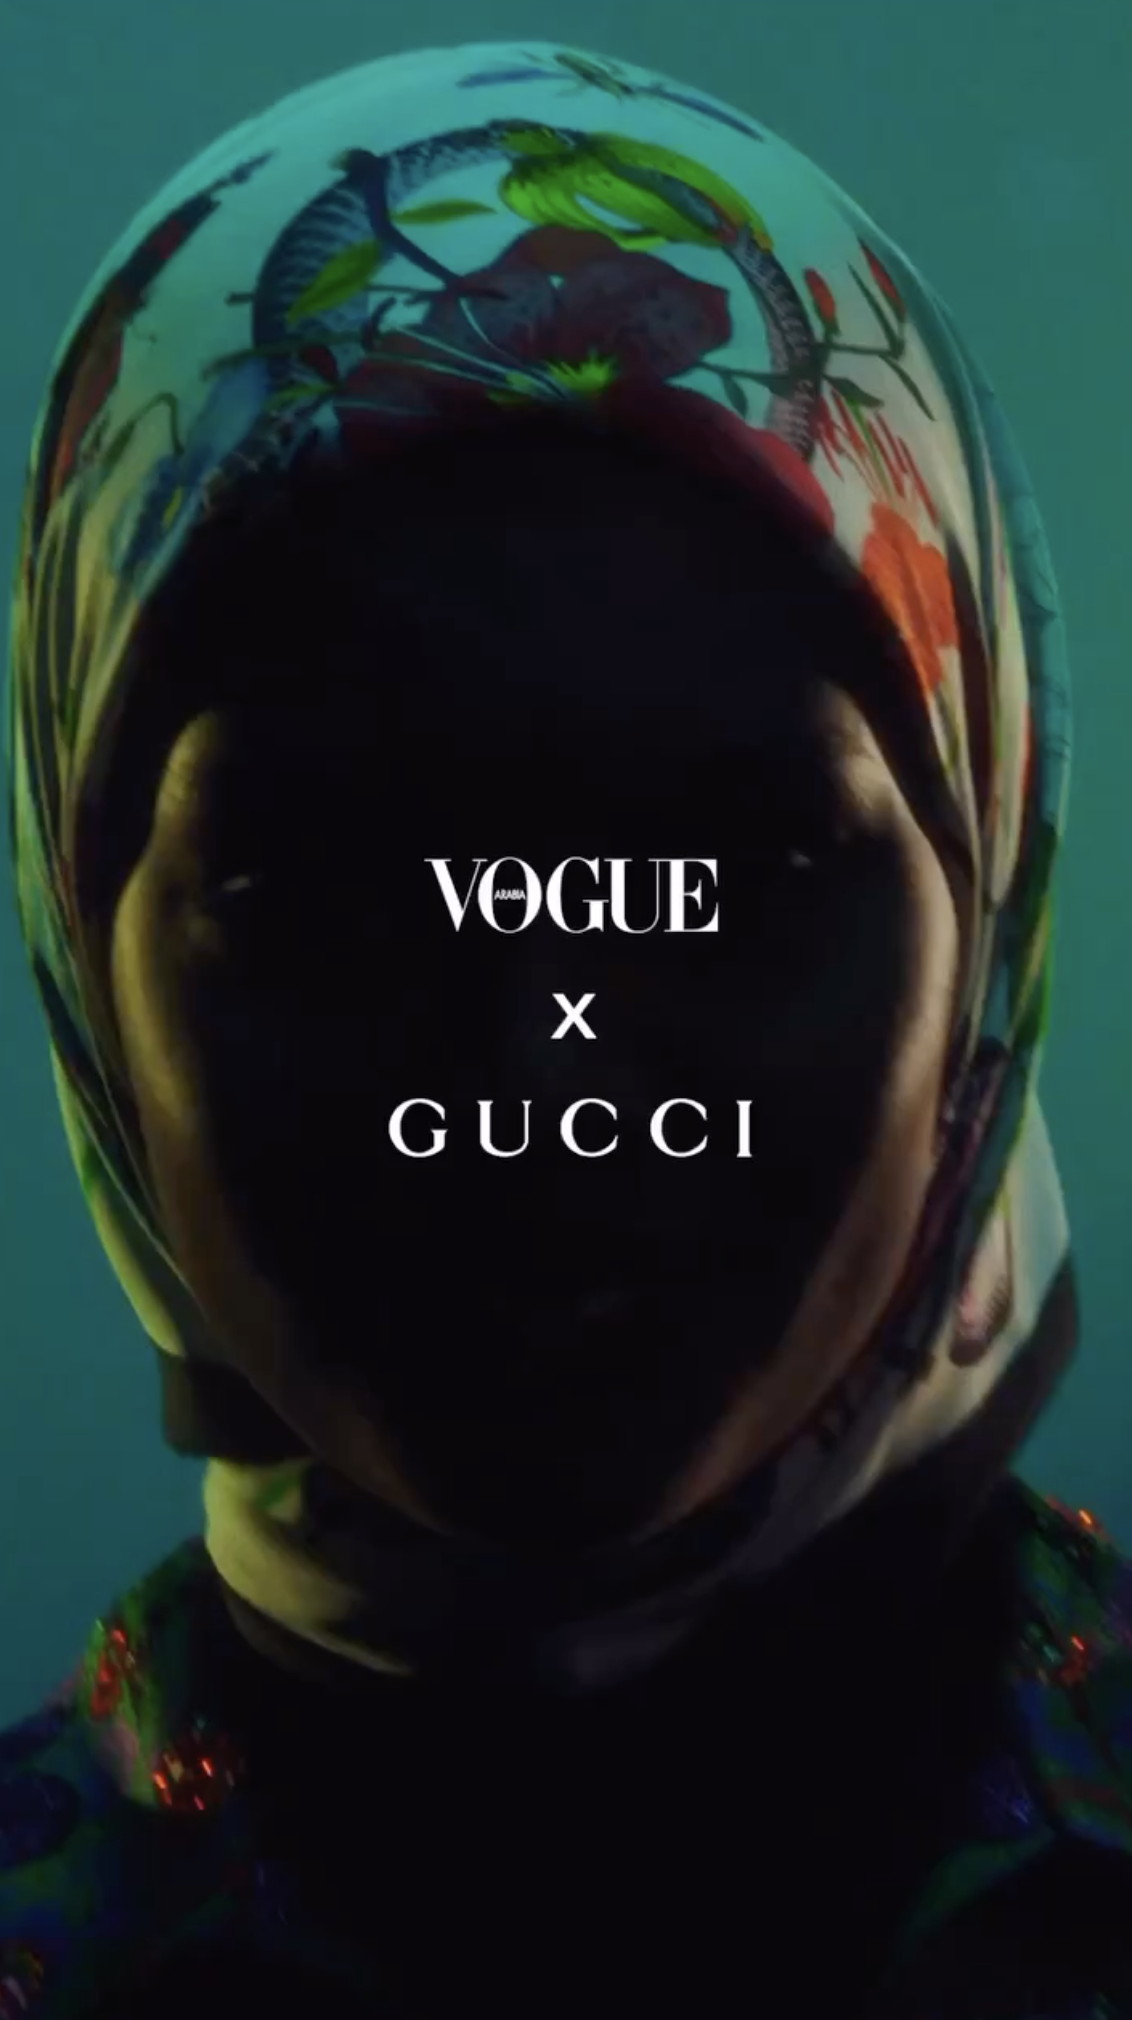 VOGUE ARABIA -  Vogue Arabia x Gucci
Photographer: Scandebergs
Model: Amina Adan, Emma Goune, Yoesry, Halima
